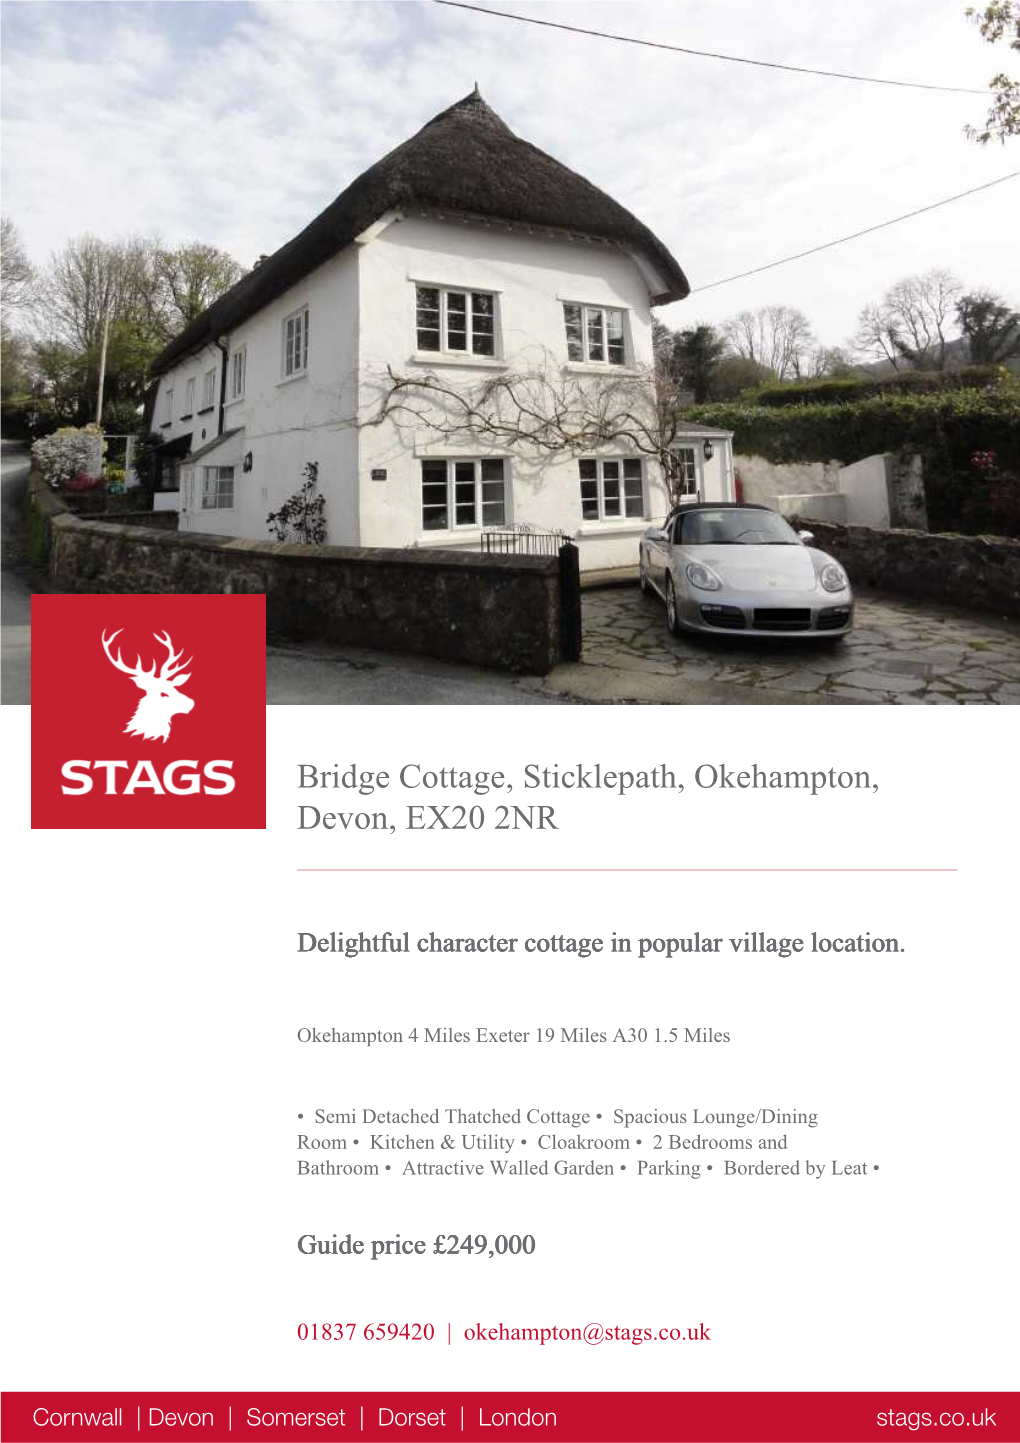 Bridge Cottage, Sticklepath, Okehampton, Devon, EX20 2NR